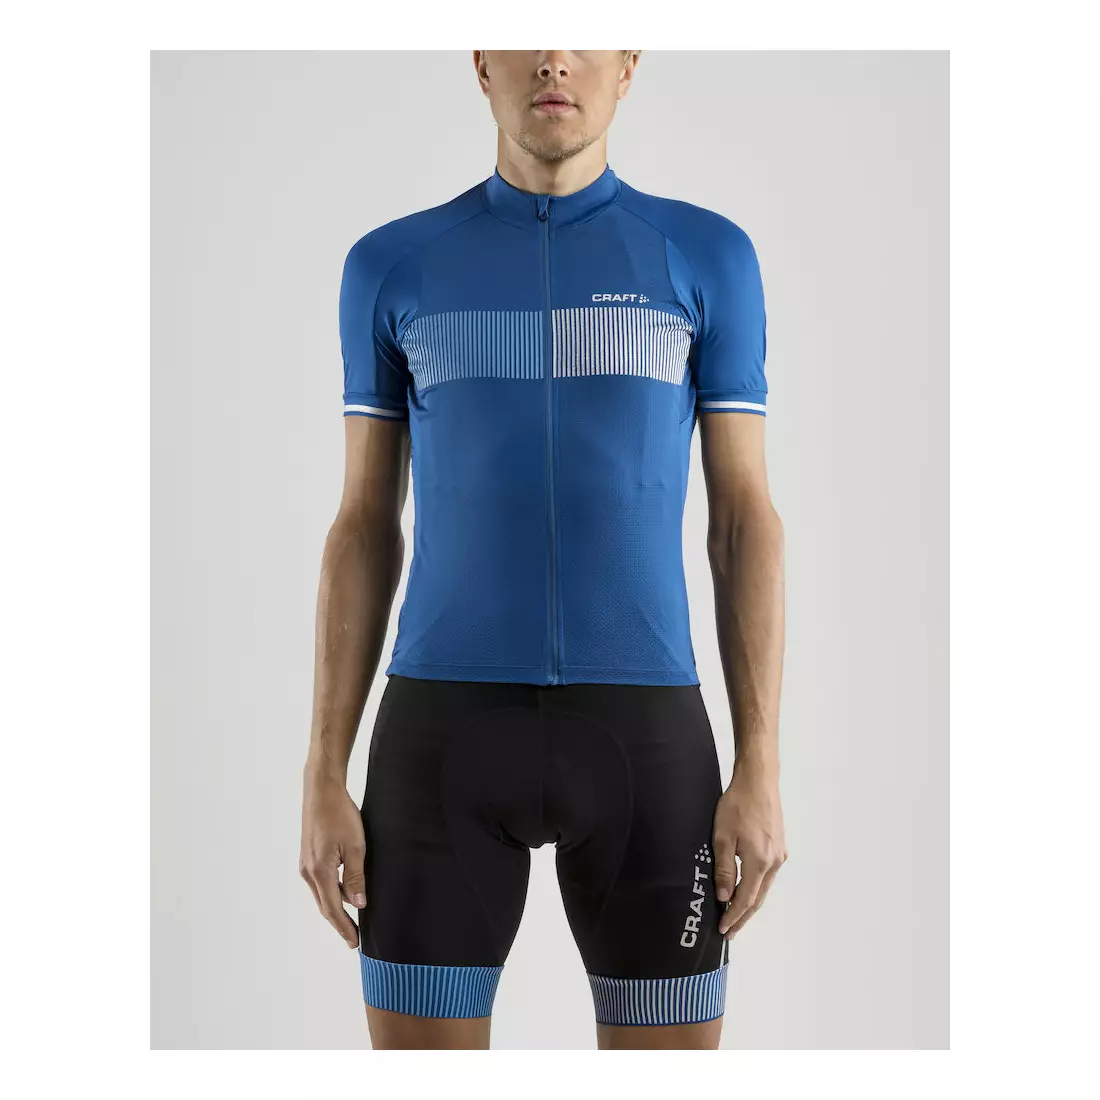 CRAFT Verve Glow pánský cyklistický dres, modrý, 1904995-2367